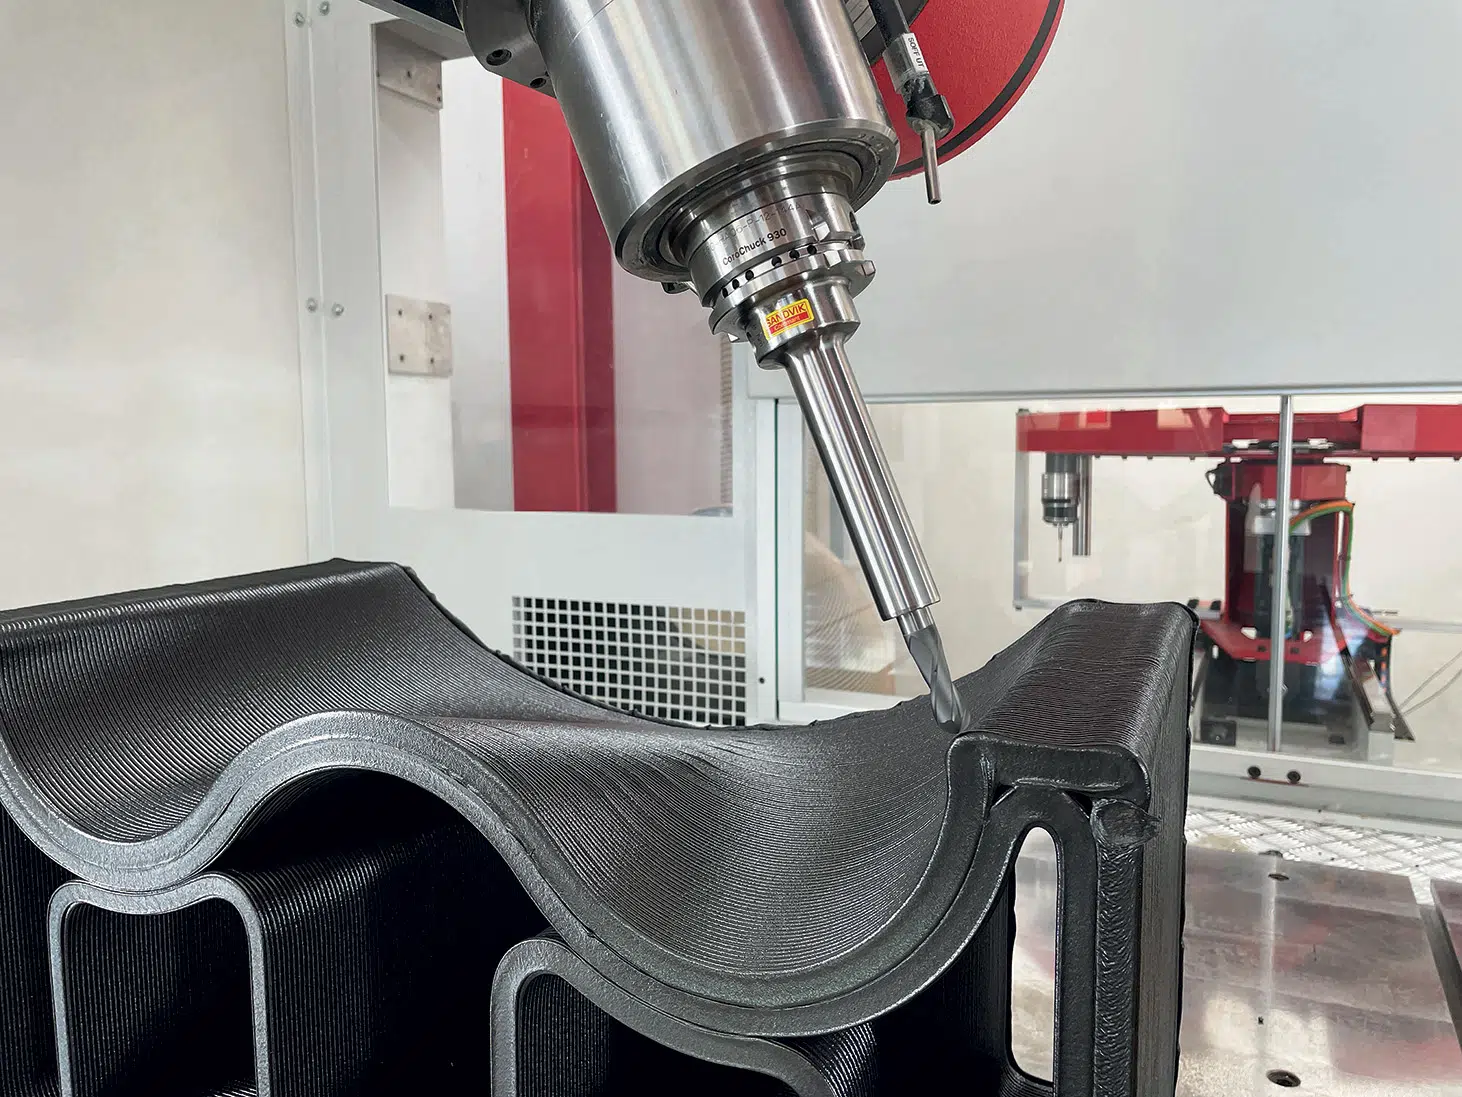  Belotti BEAD machine with Sandvik Coromant tool for carbon fiber cnc milling